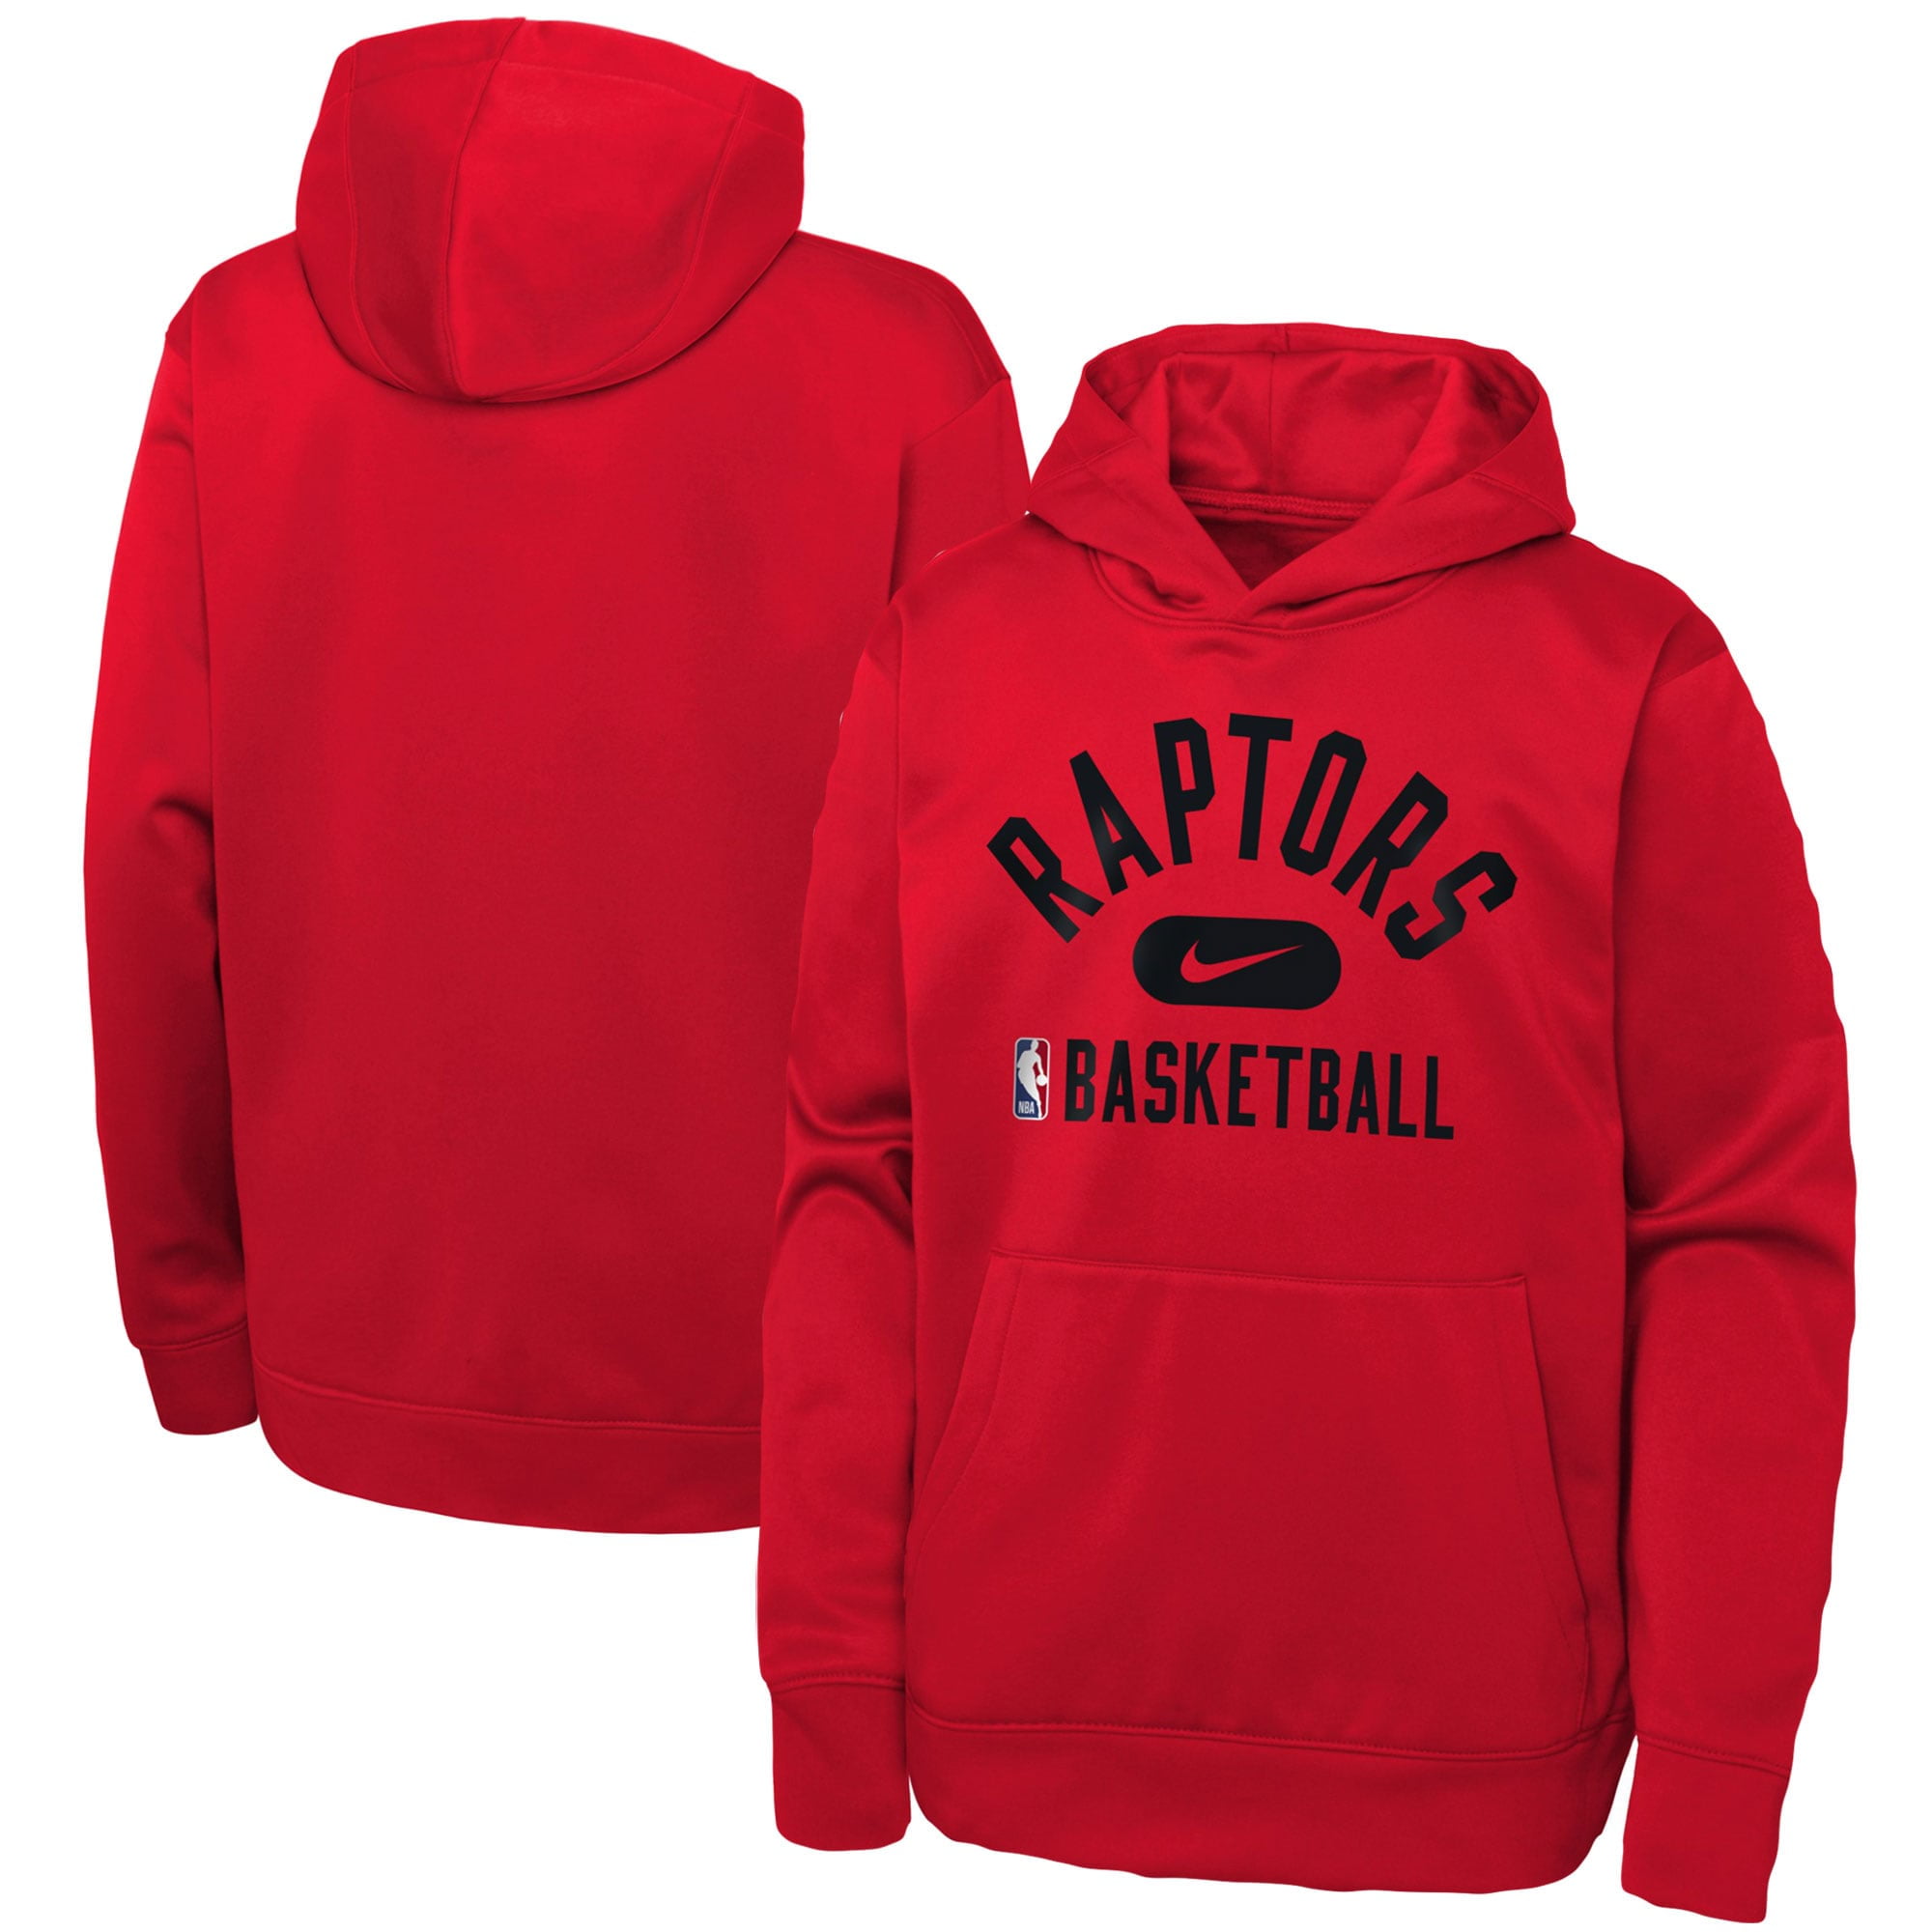 Youth Nike Red Toronto Raptors Team Spotlight Performance Pullover Hoodie Size: Medium